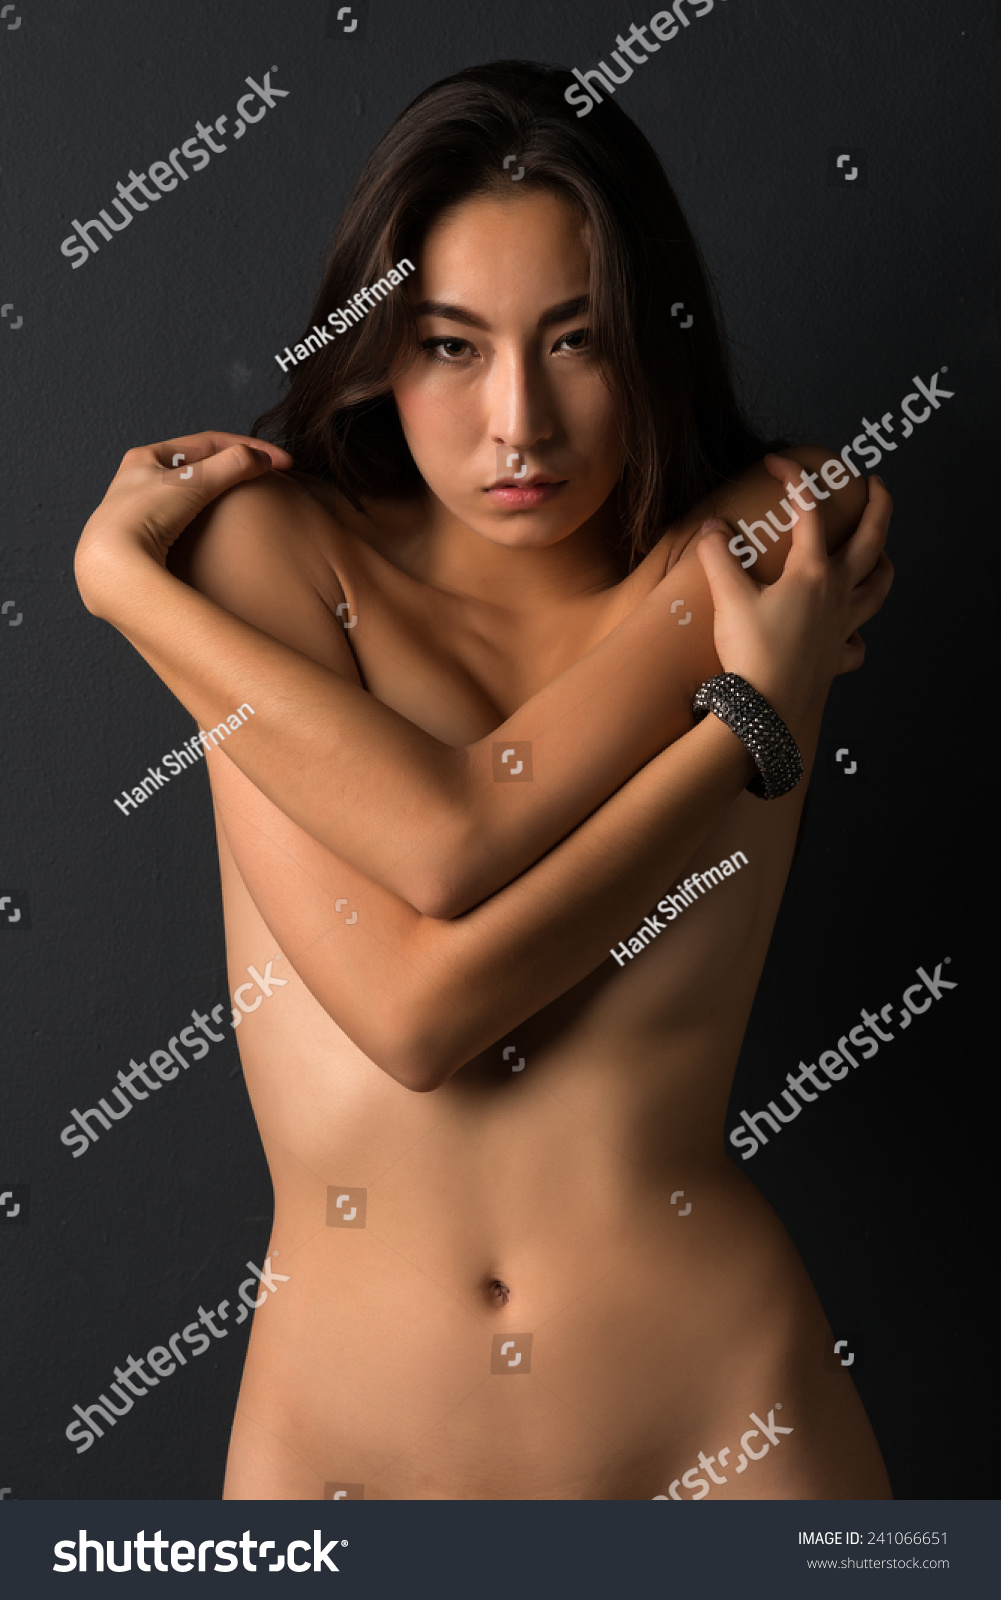 cornelia wilson recommends asian beautiful nude women pic